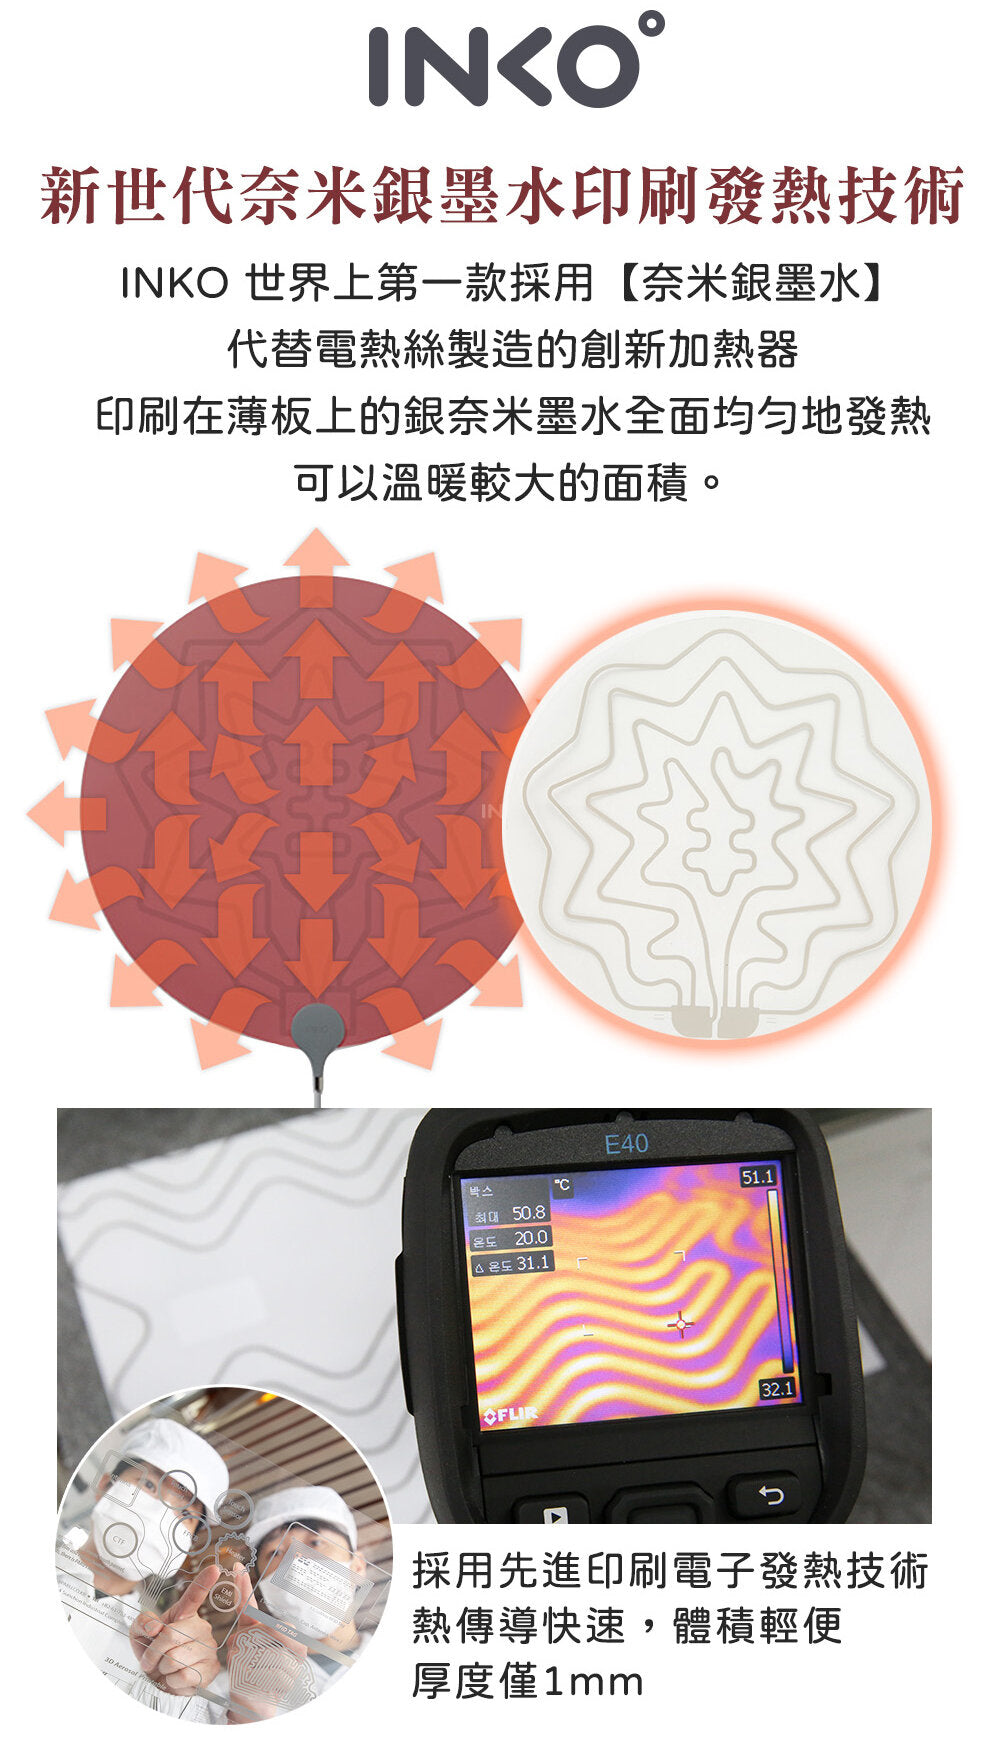 Inko - Smart Heating Mat HEAL 超薄保暖墊 (仿麂皮) PD-S270